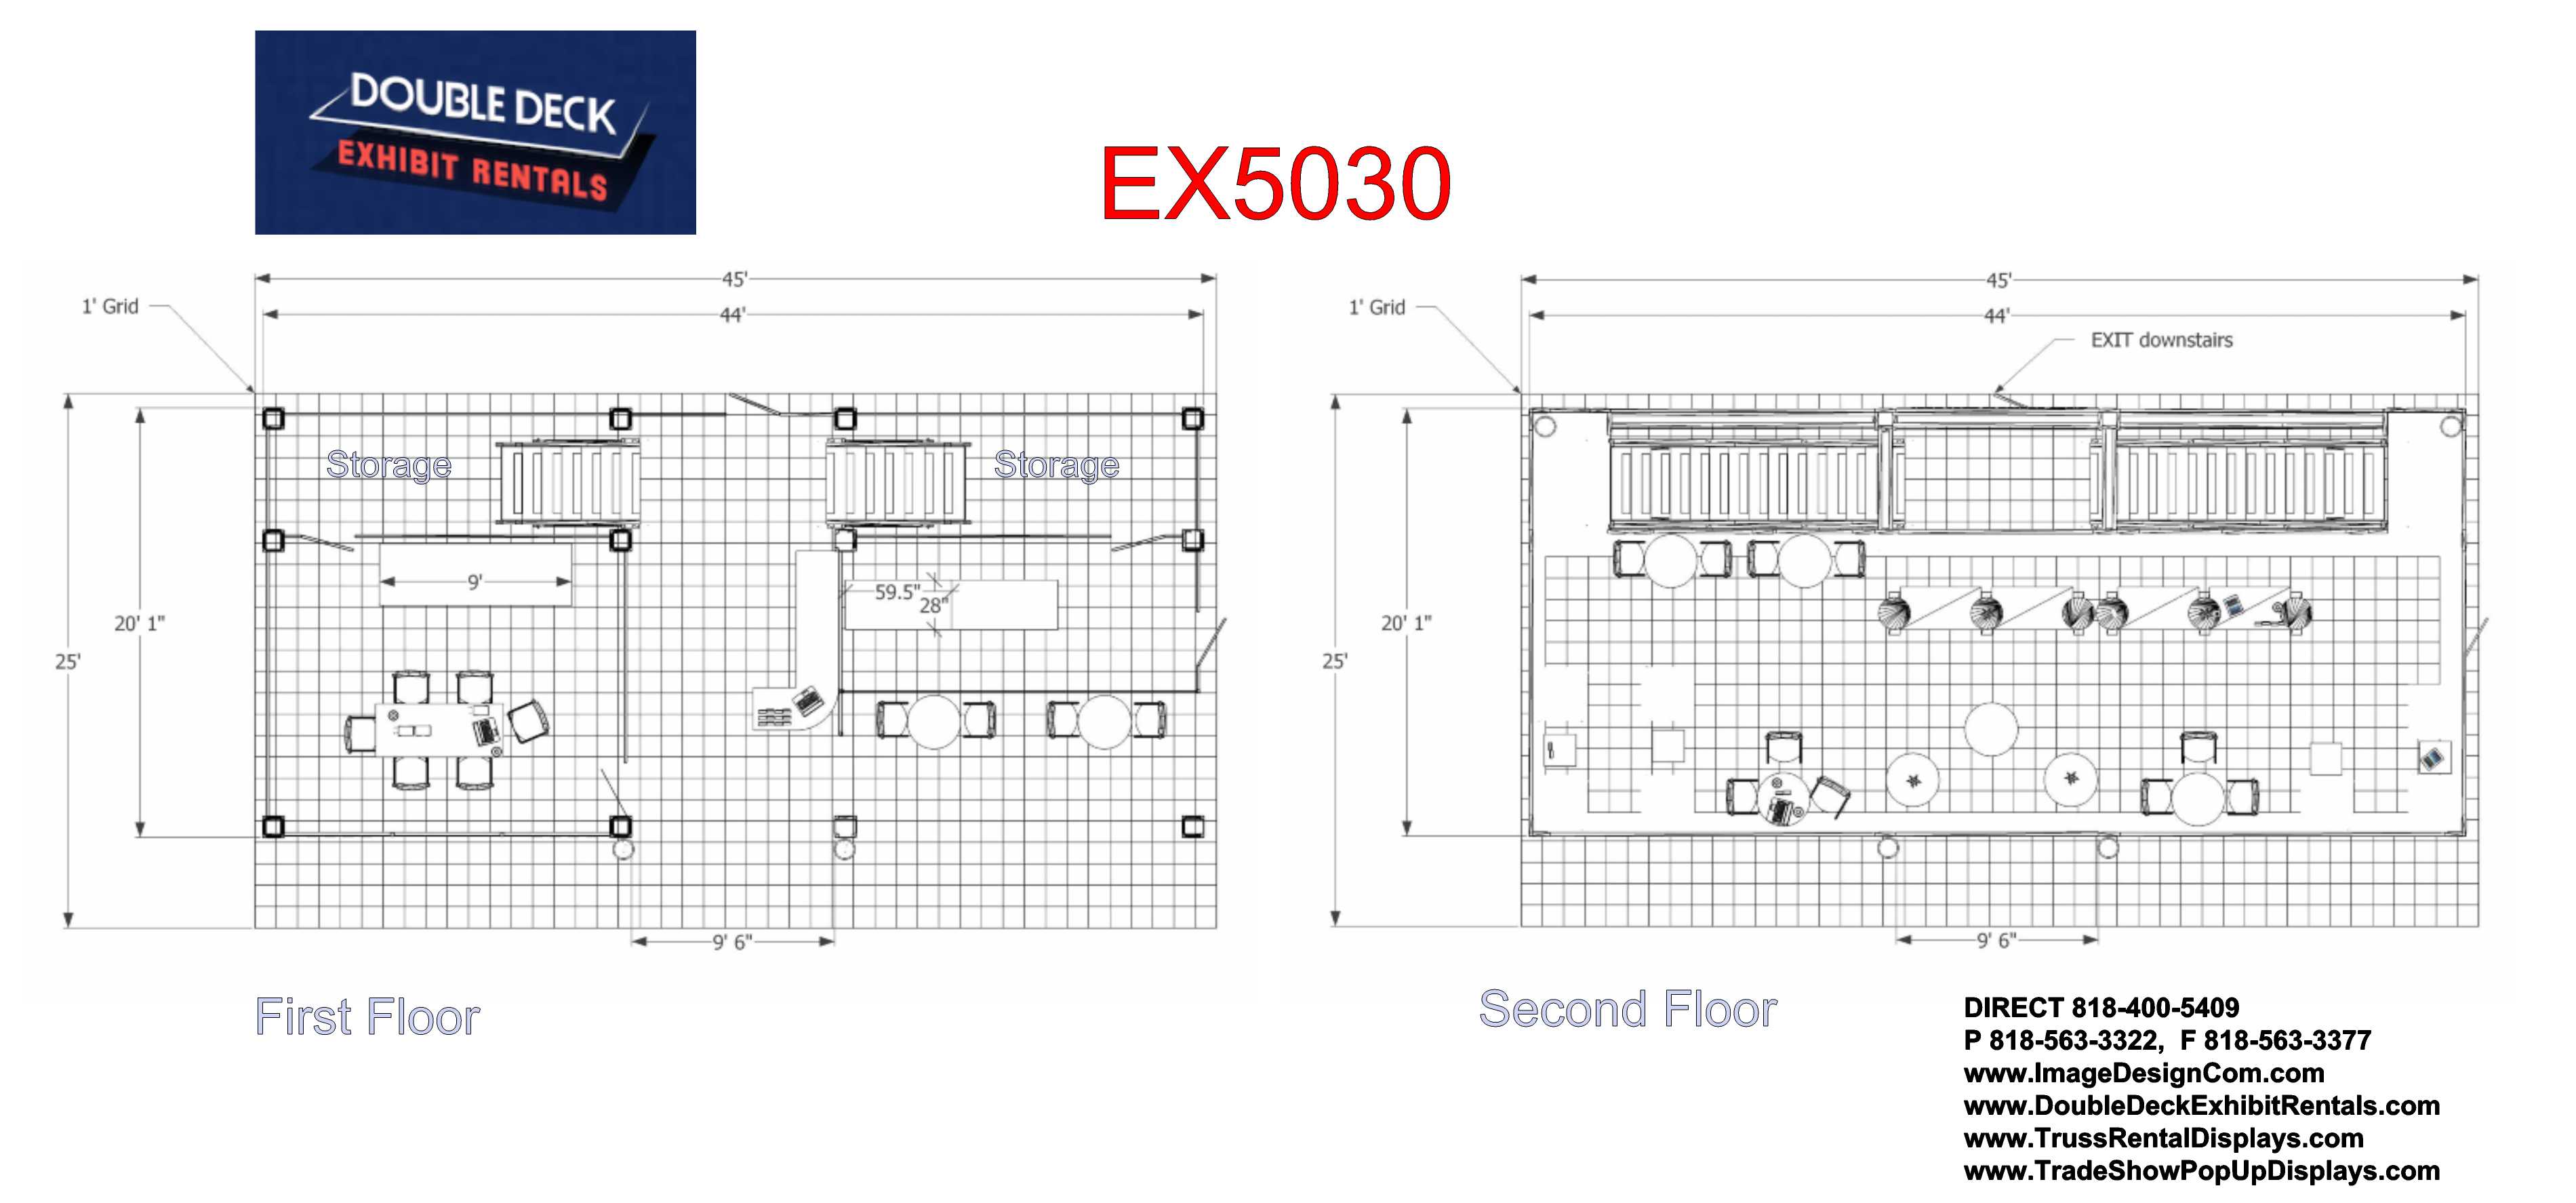 EX5030 floor plan - large multistory trade show exhibit rental